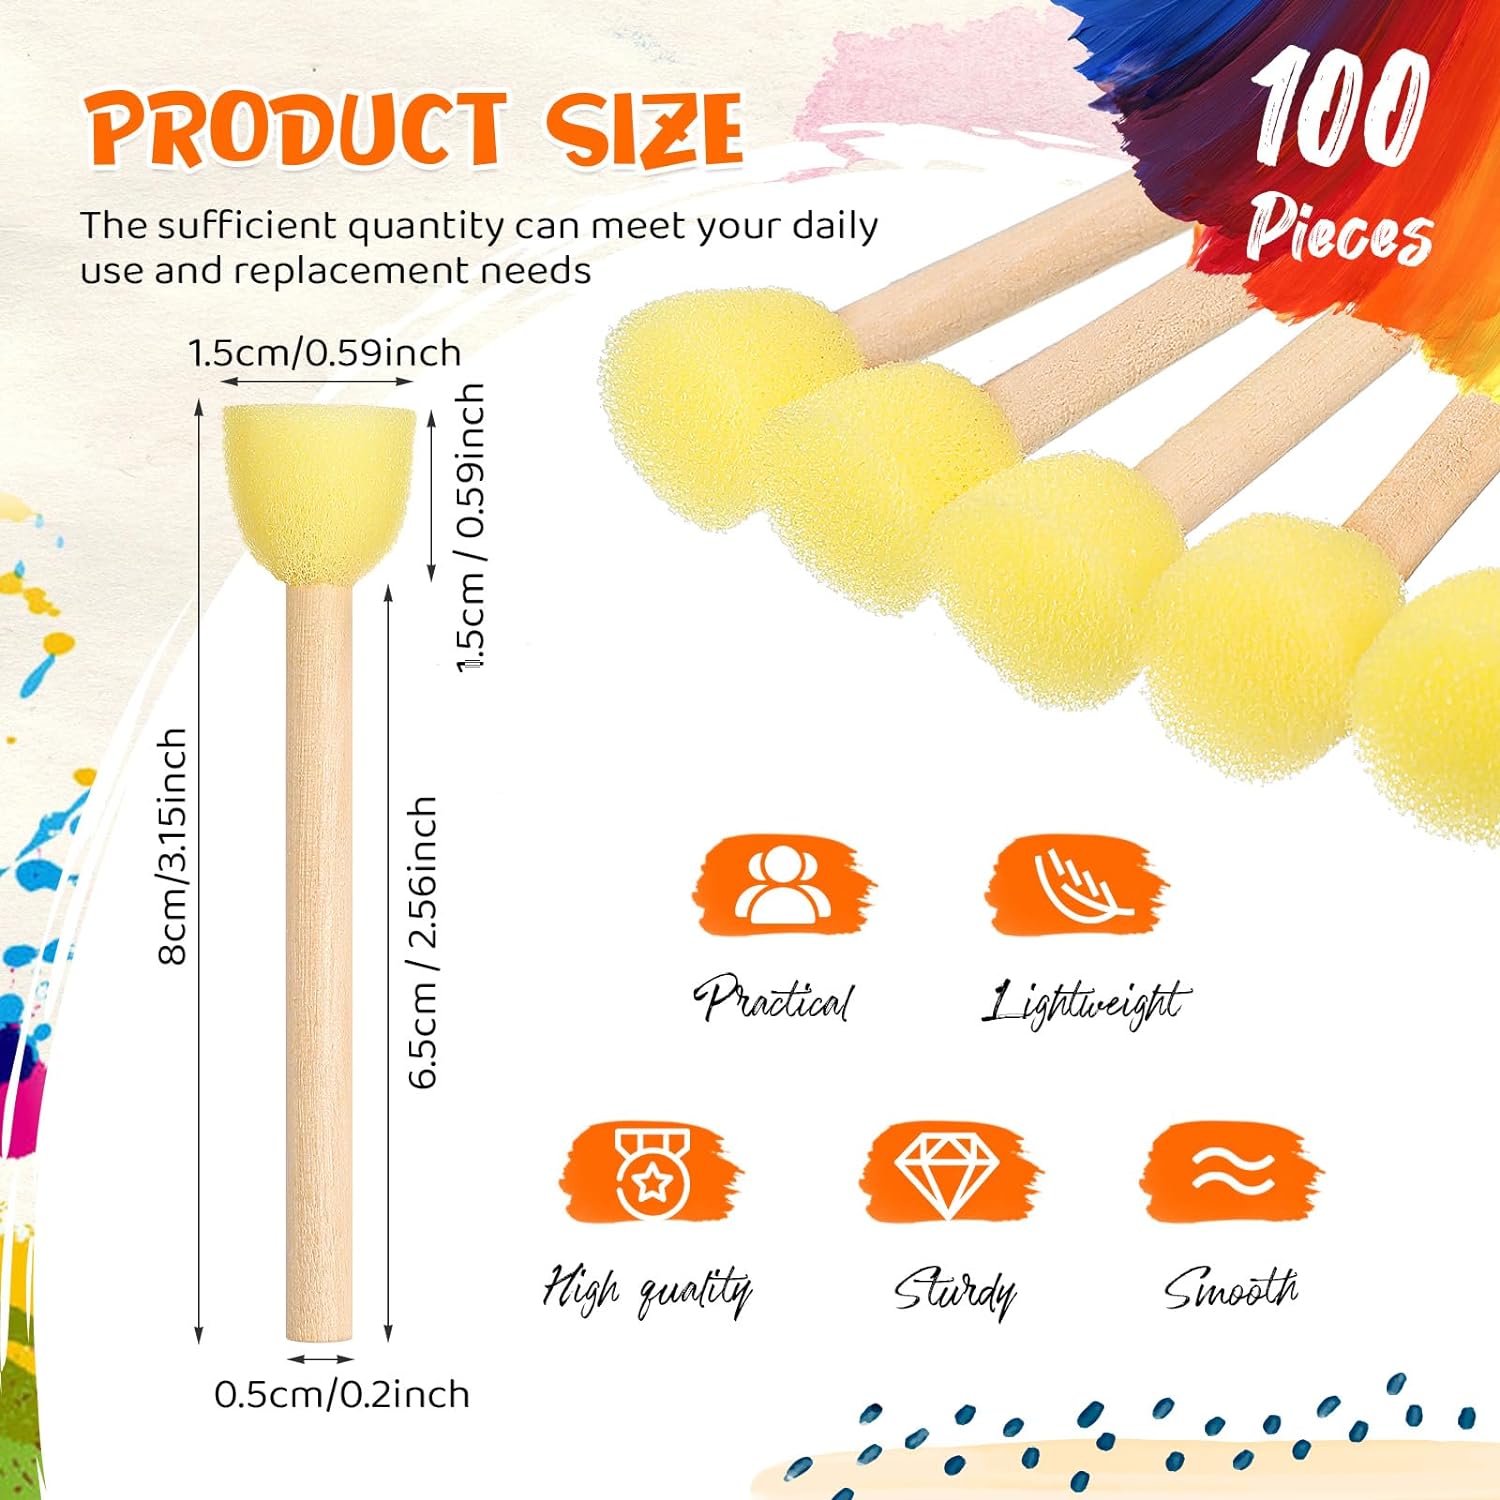 100Pcs Small Round Paint Sponge Foam Brush for Kids DIY Painting Crafts